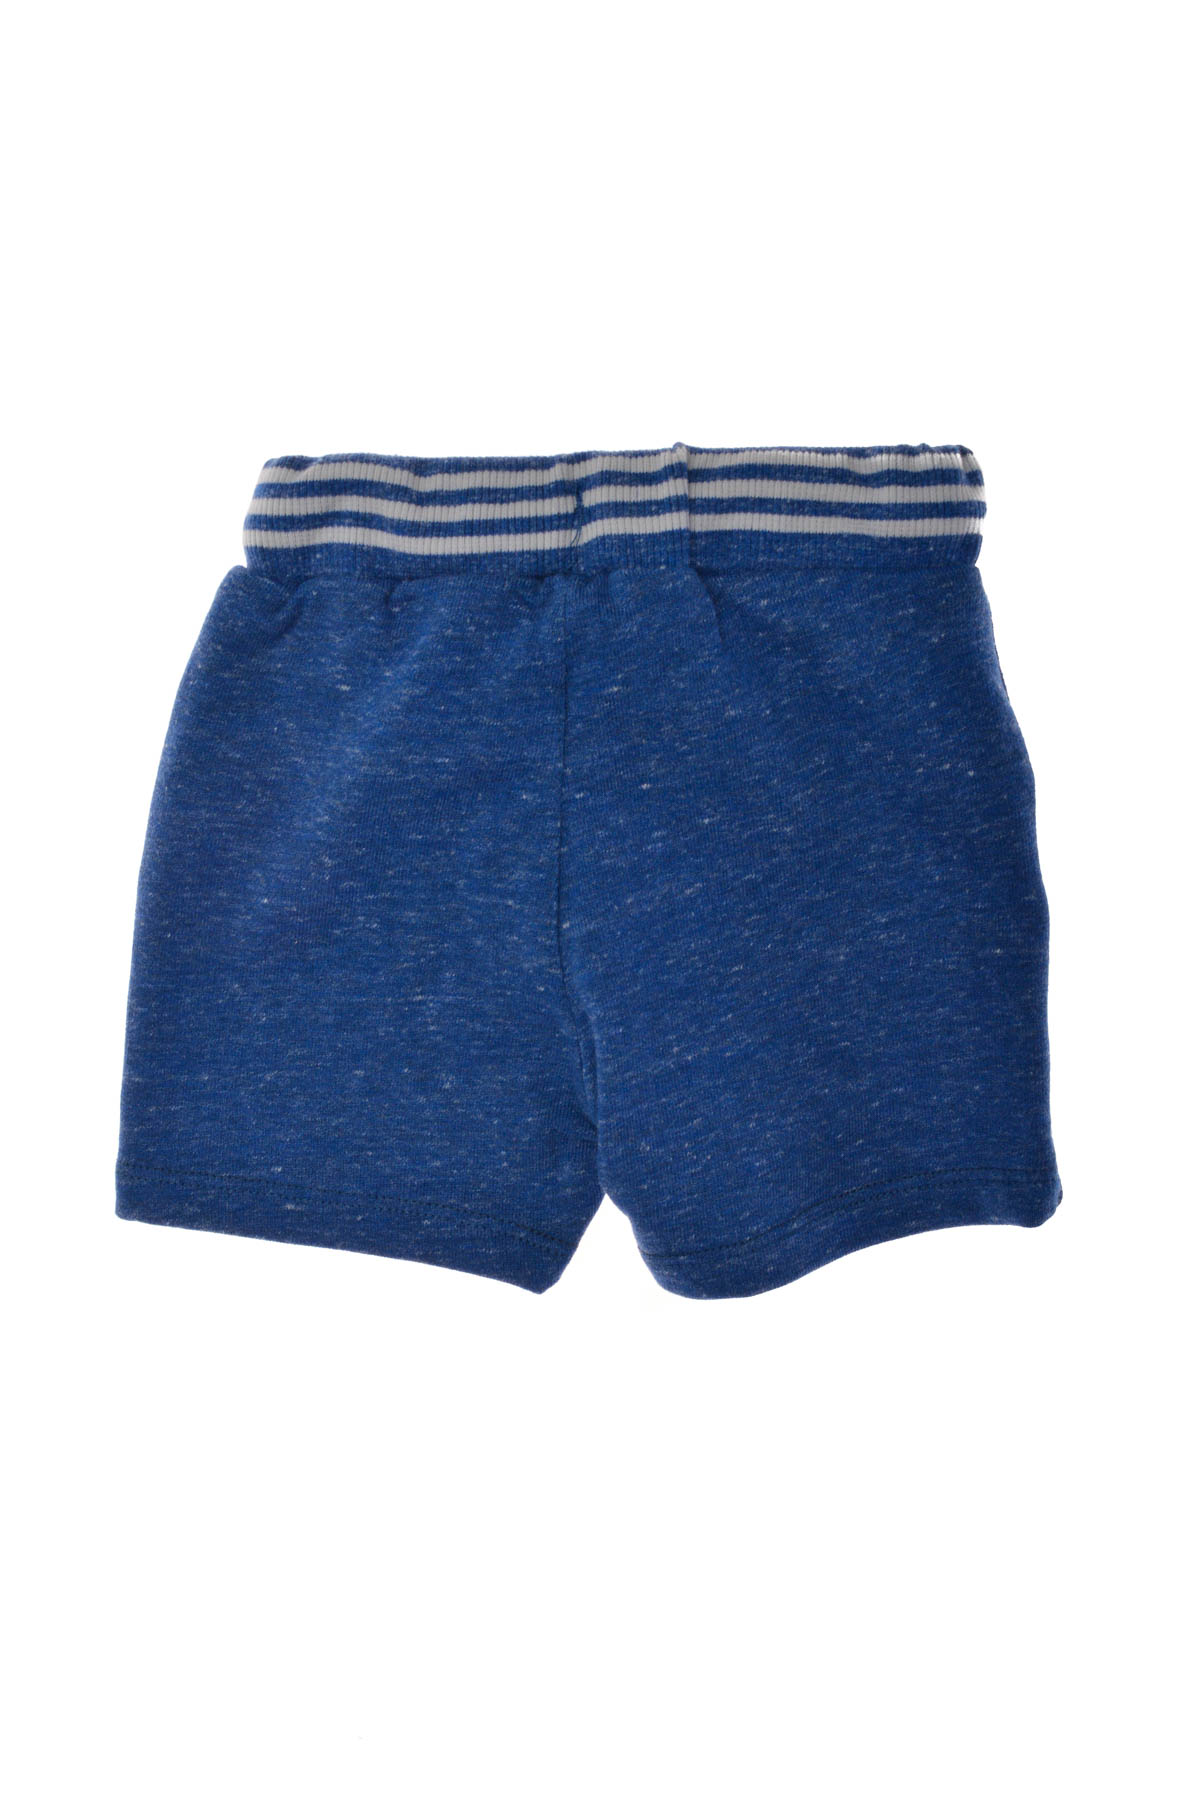 Baby boy's shorts - KANZ - 1